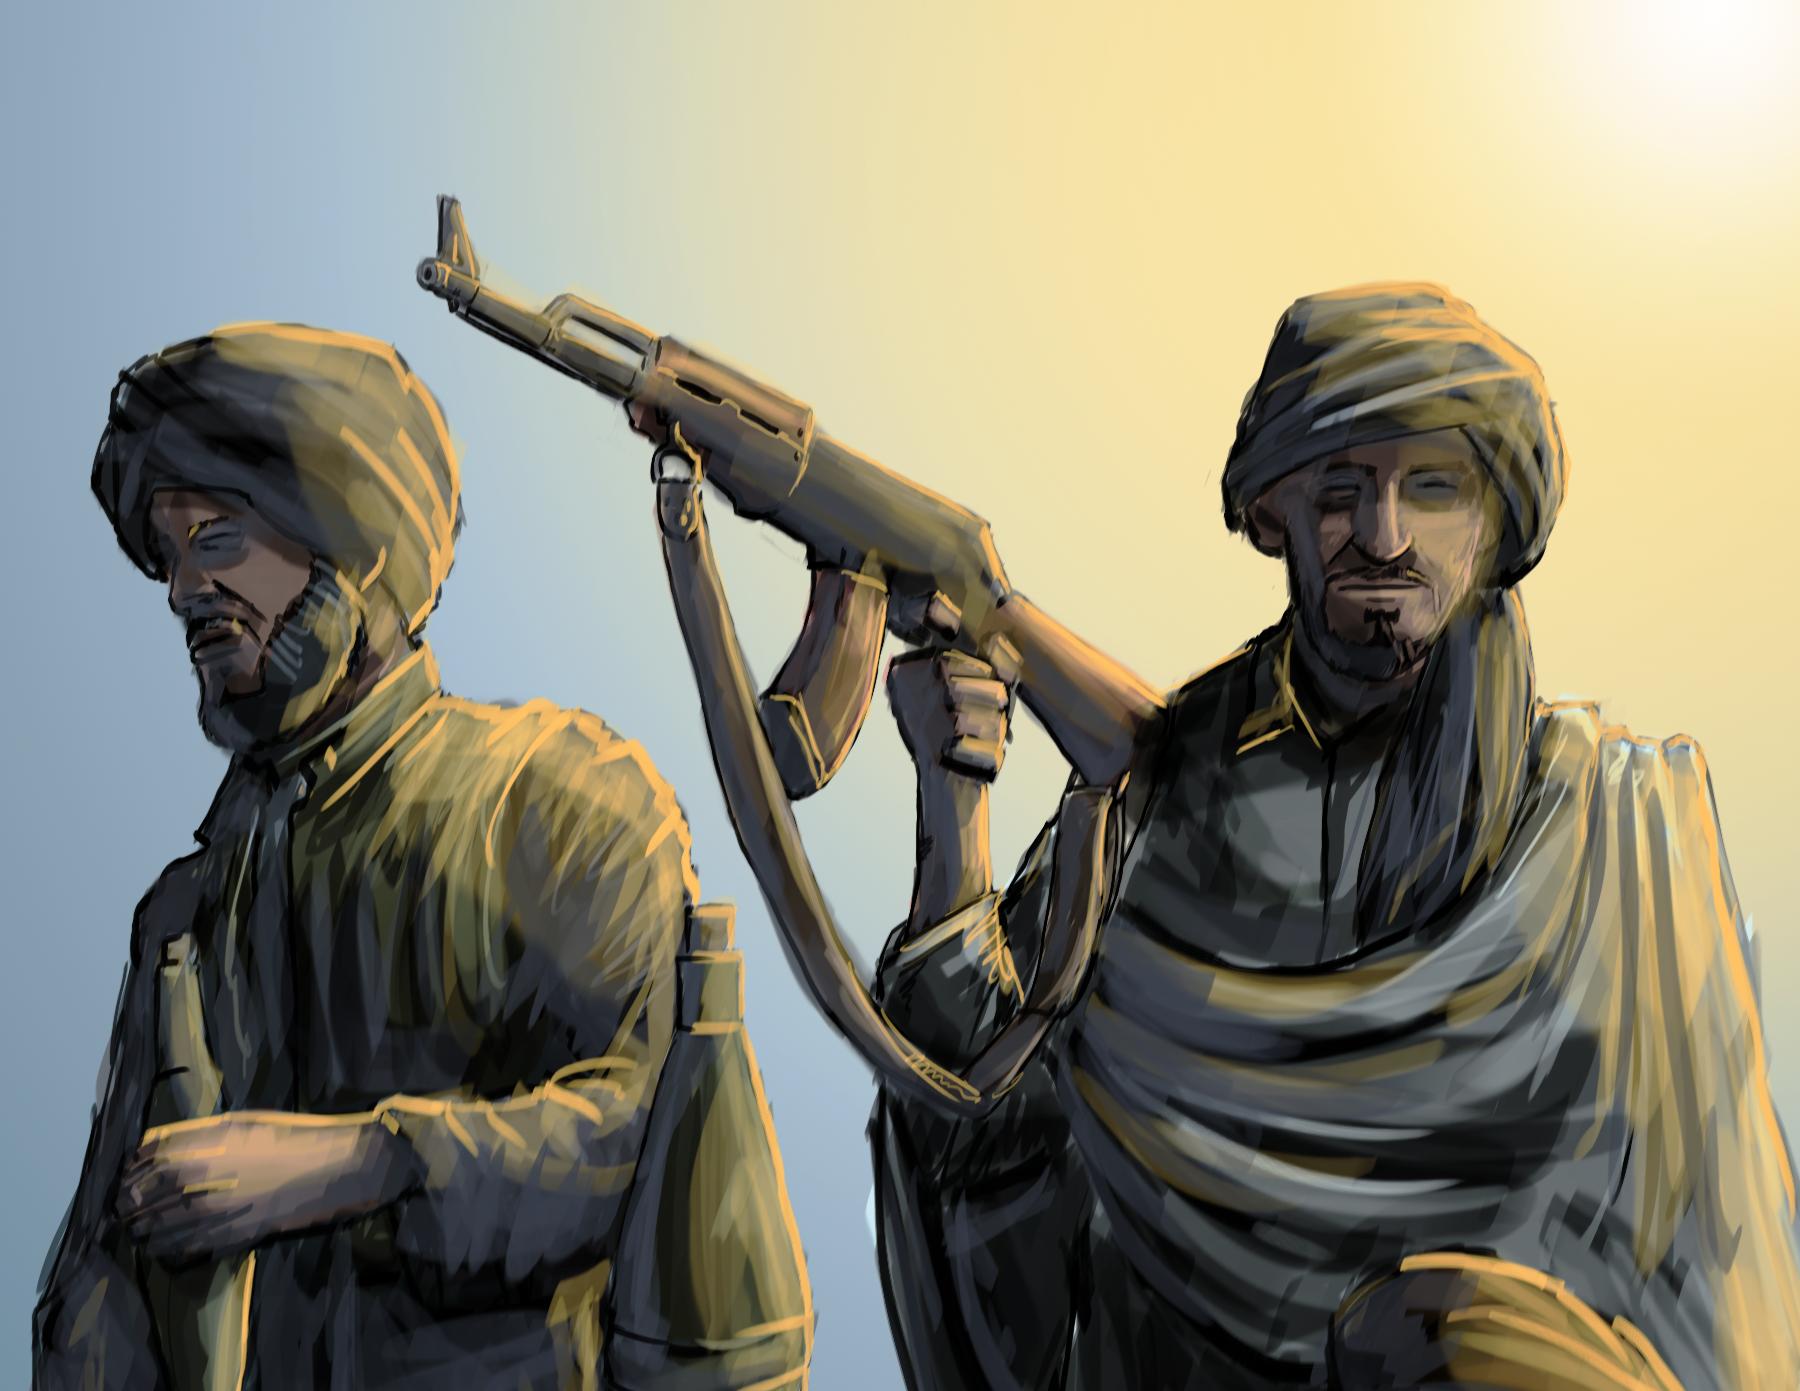 Holup, Taliban! : r/HolUp